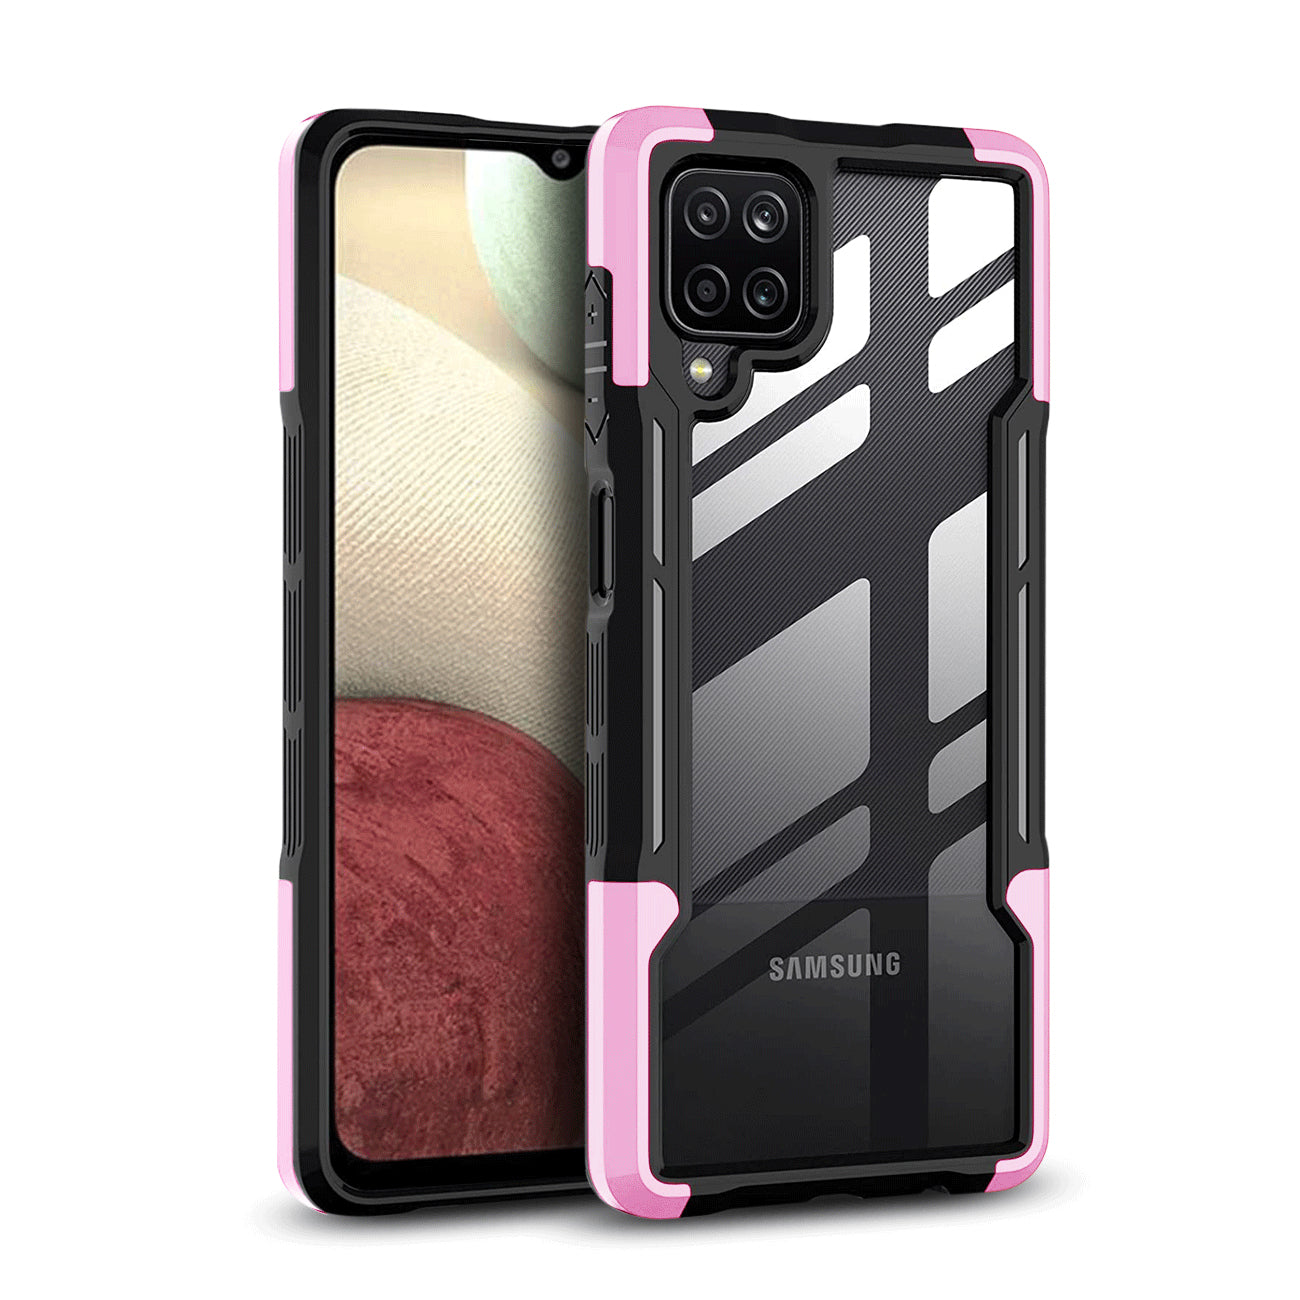 Case Shockproof Excellent Grip Silky Feeling Samsung A12 5G Pink Color